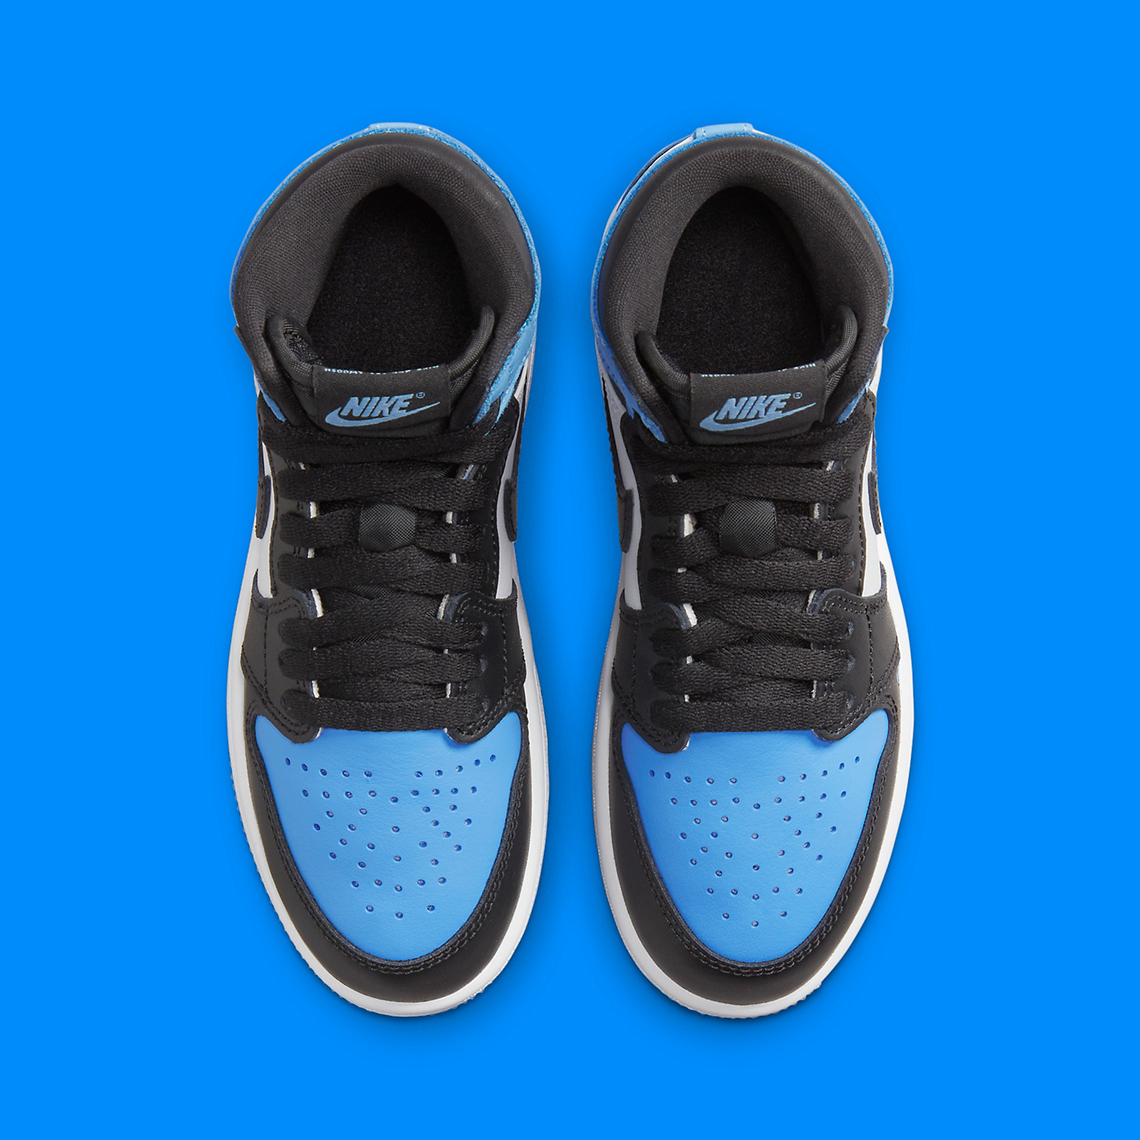 Detailed Look At The Air Jordan 1 High UNC Toe - Sneaker News